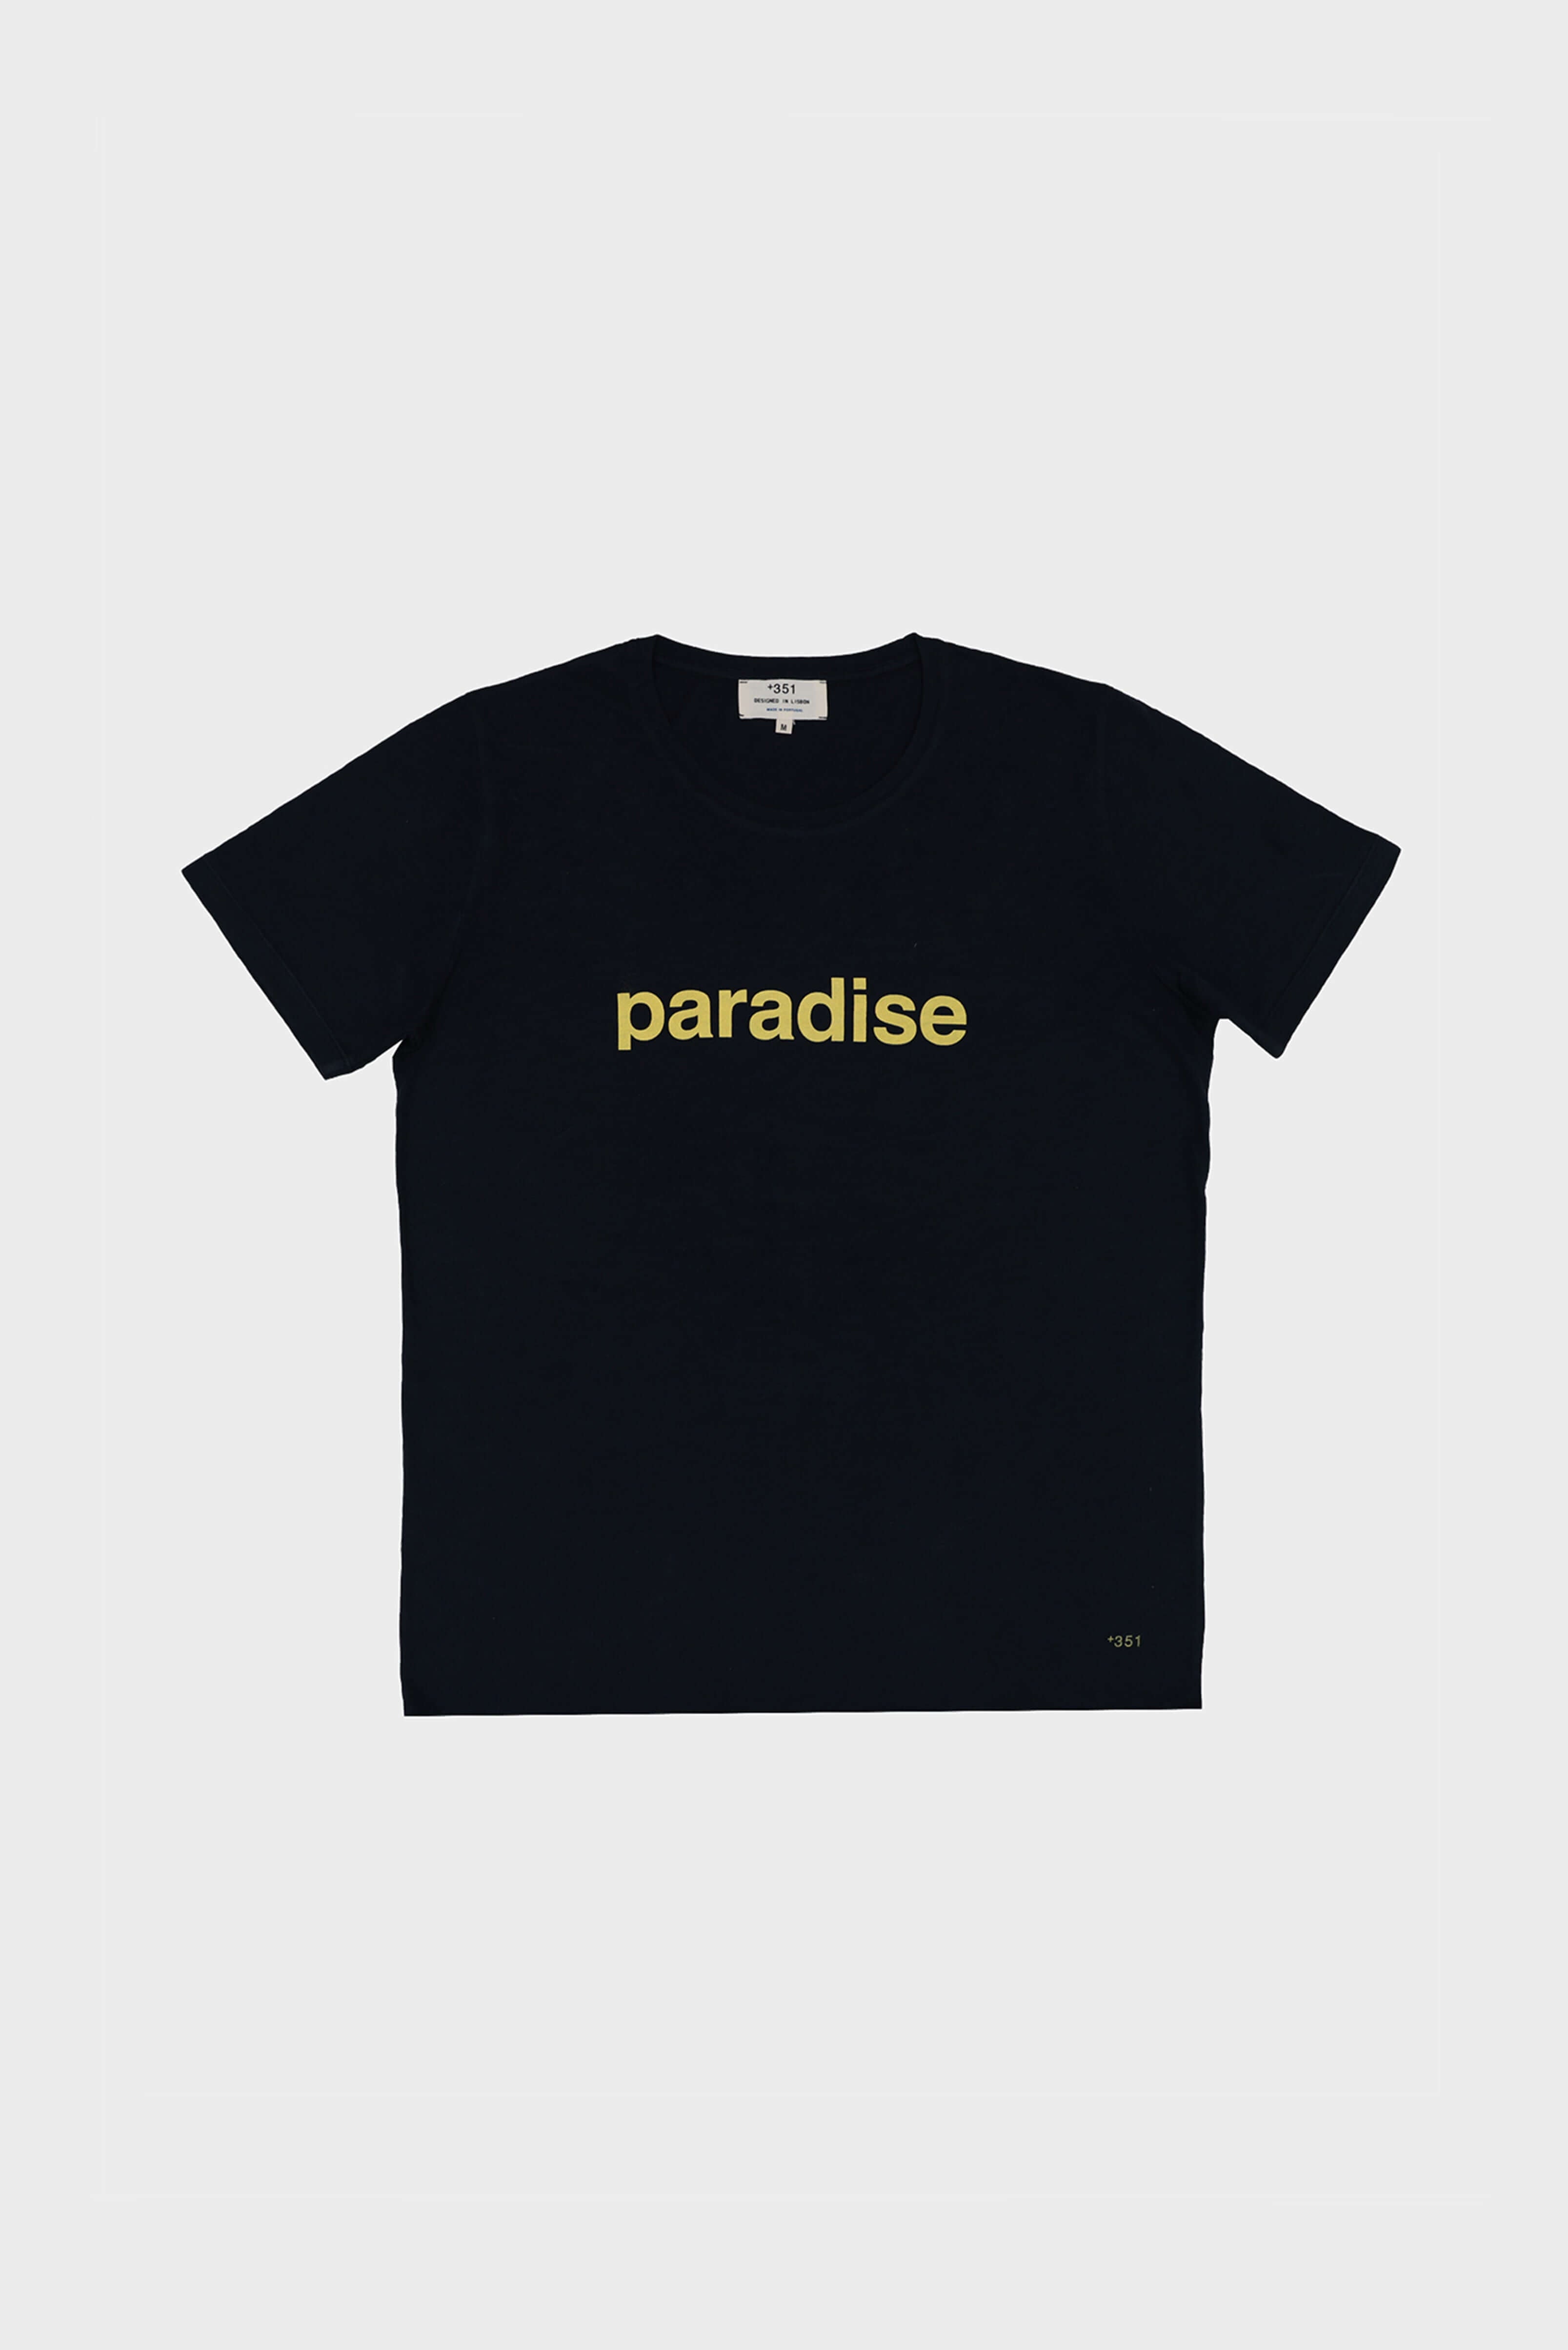 T-SHIRT GRAPHIC PARADISE BLACK & PALE YELLOW